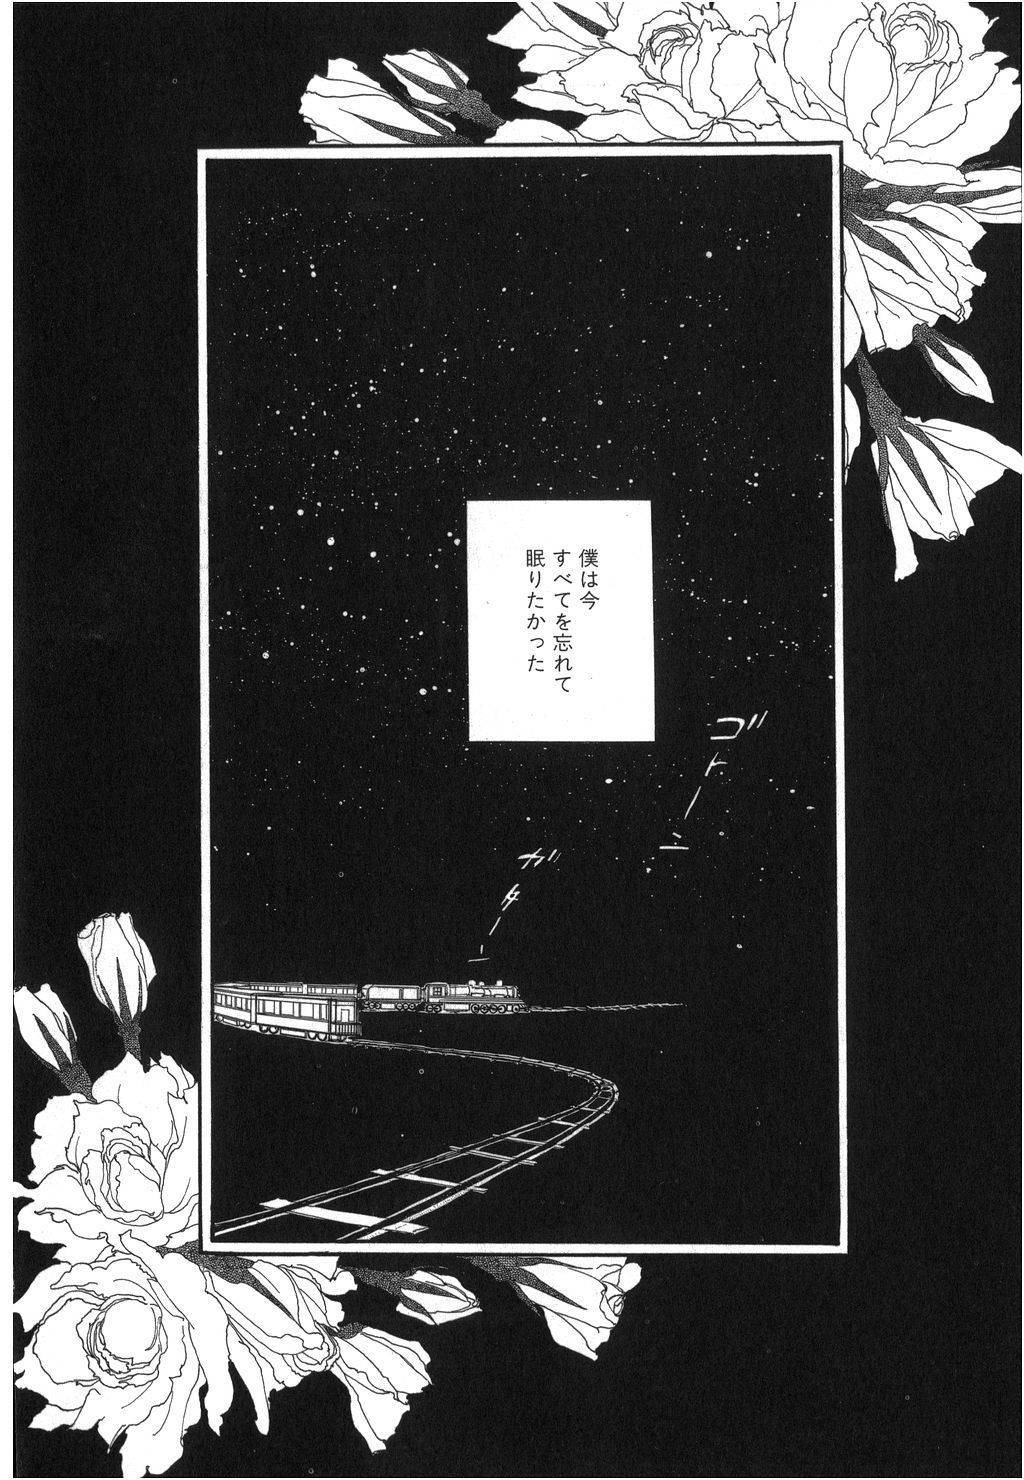 Manga Iphone Black And White Wallpaper